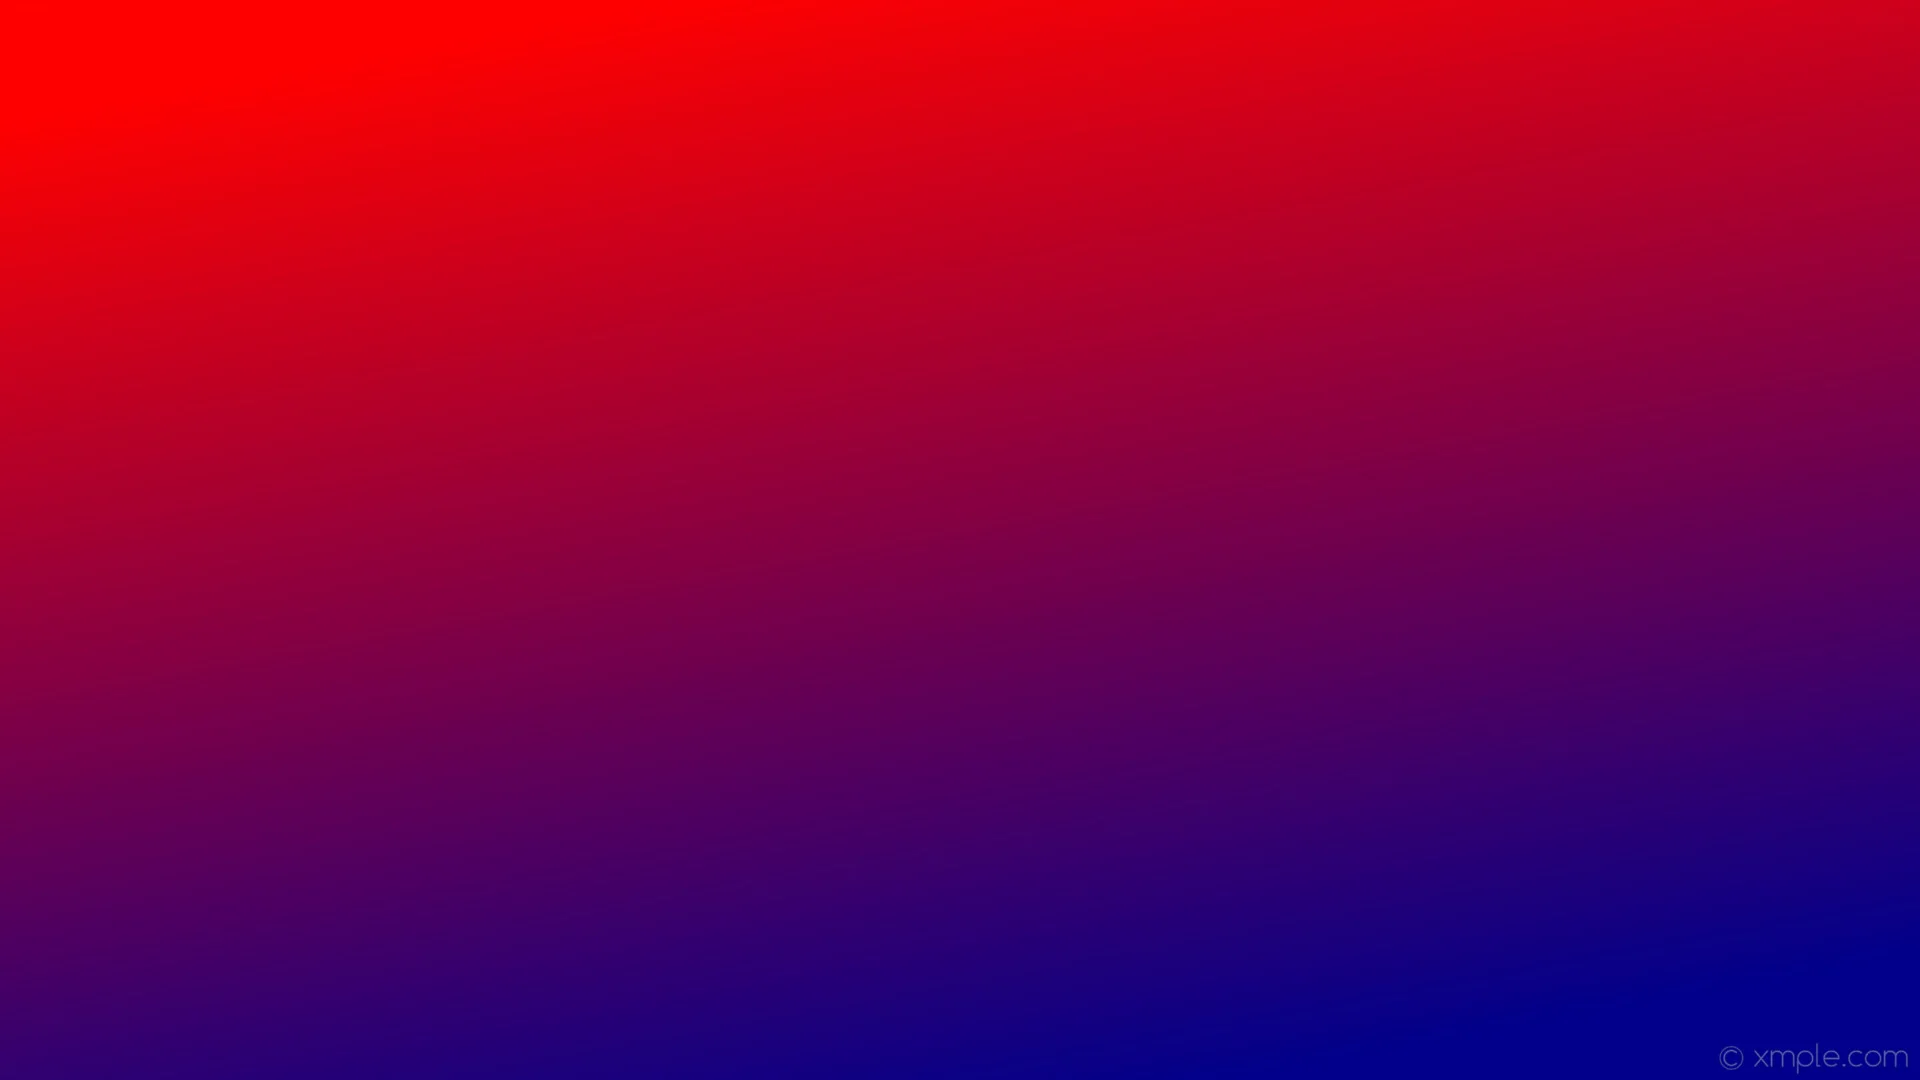 wallpaper gradient blue red linear dark blue #00008b #ff0000 300Â°